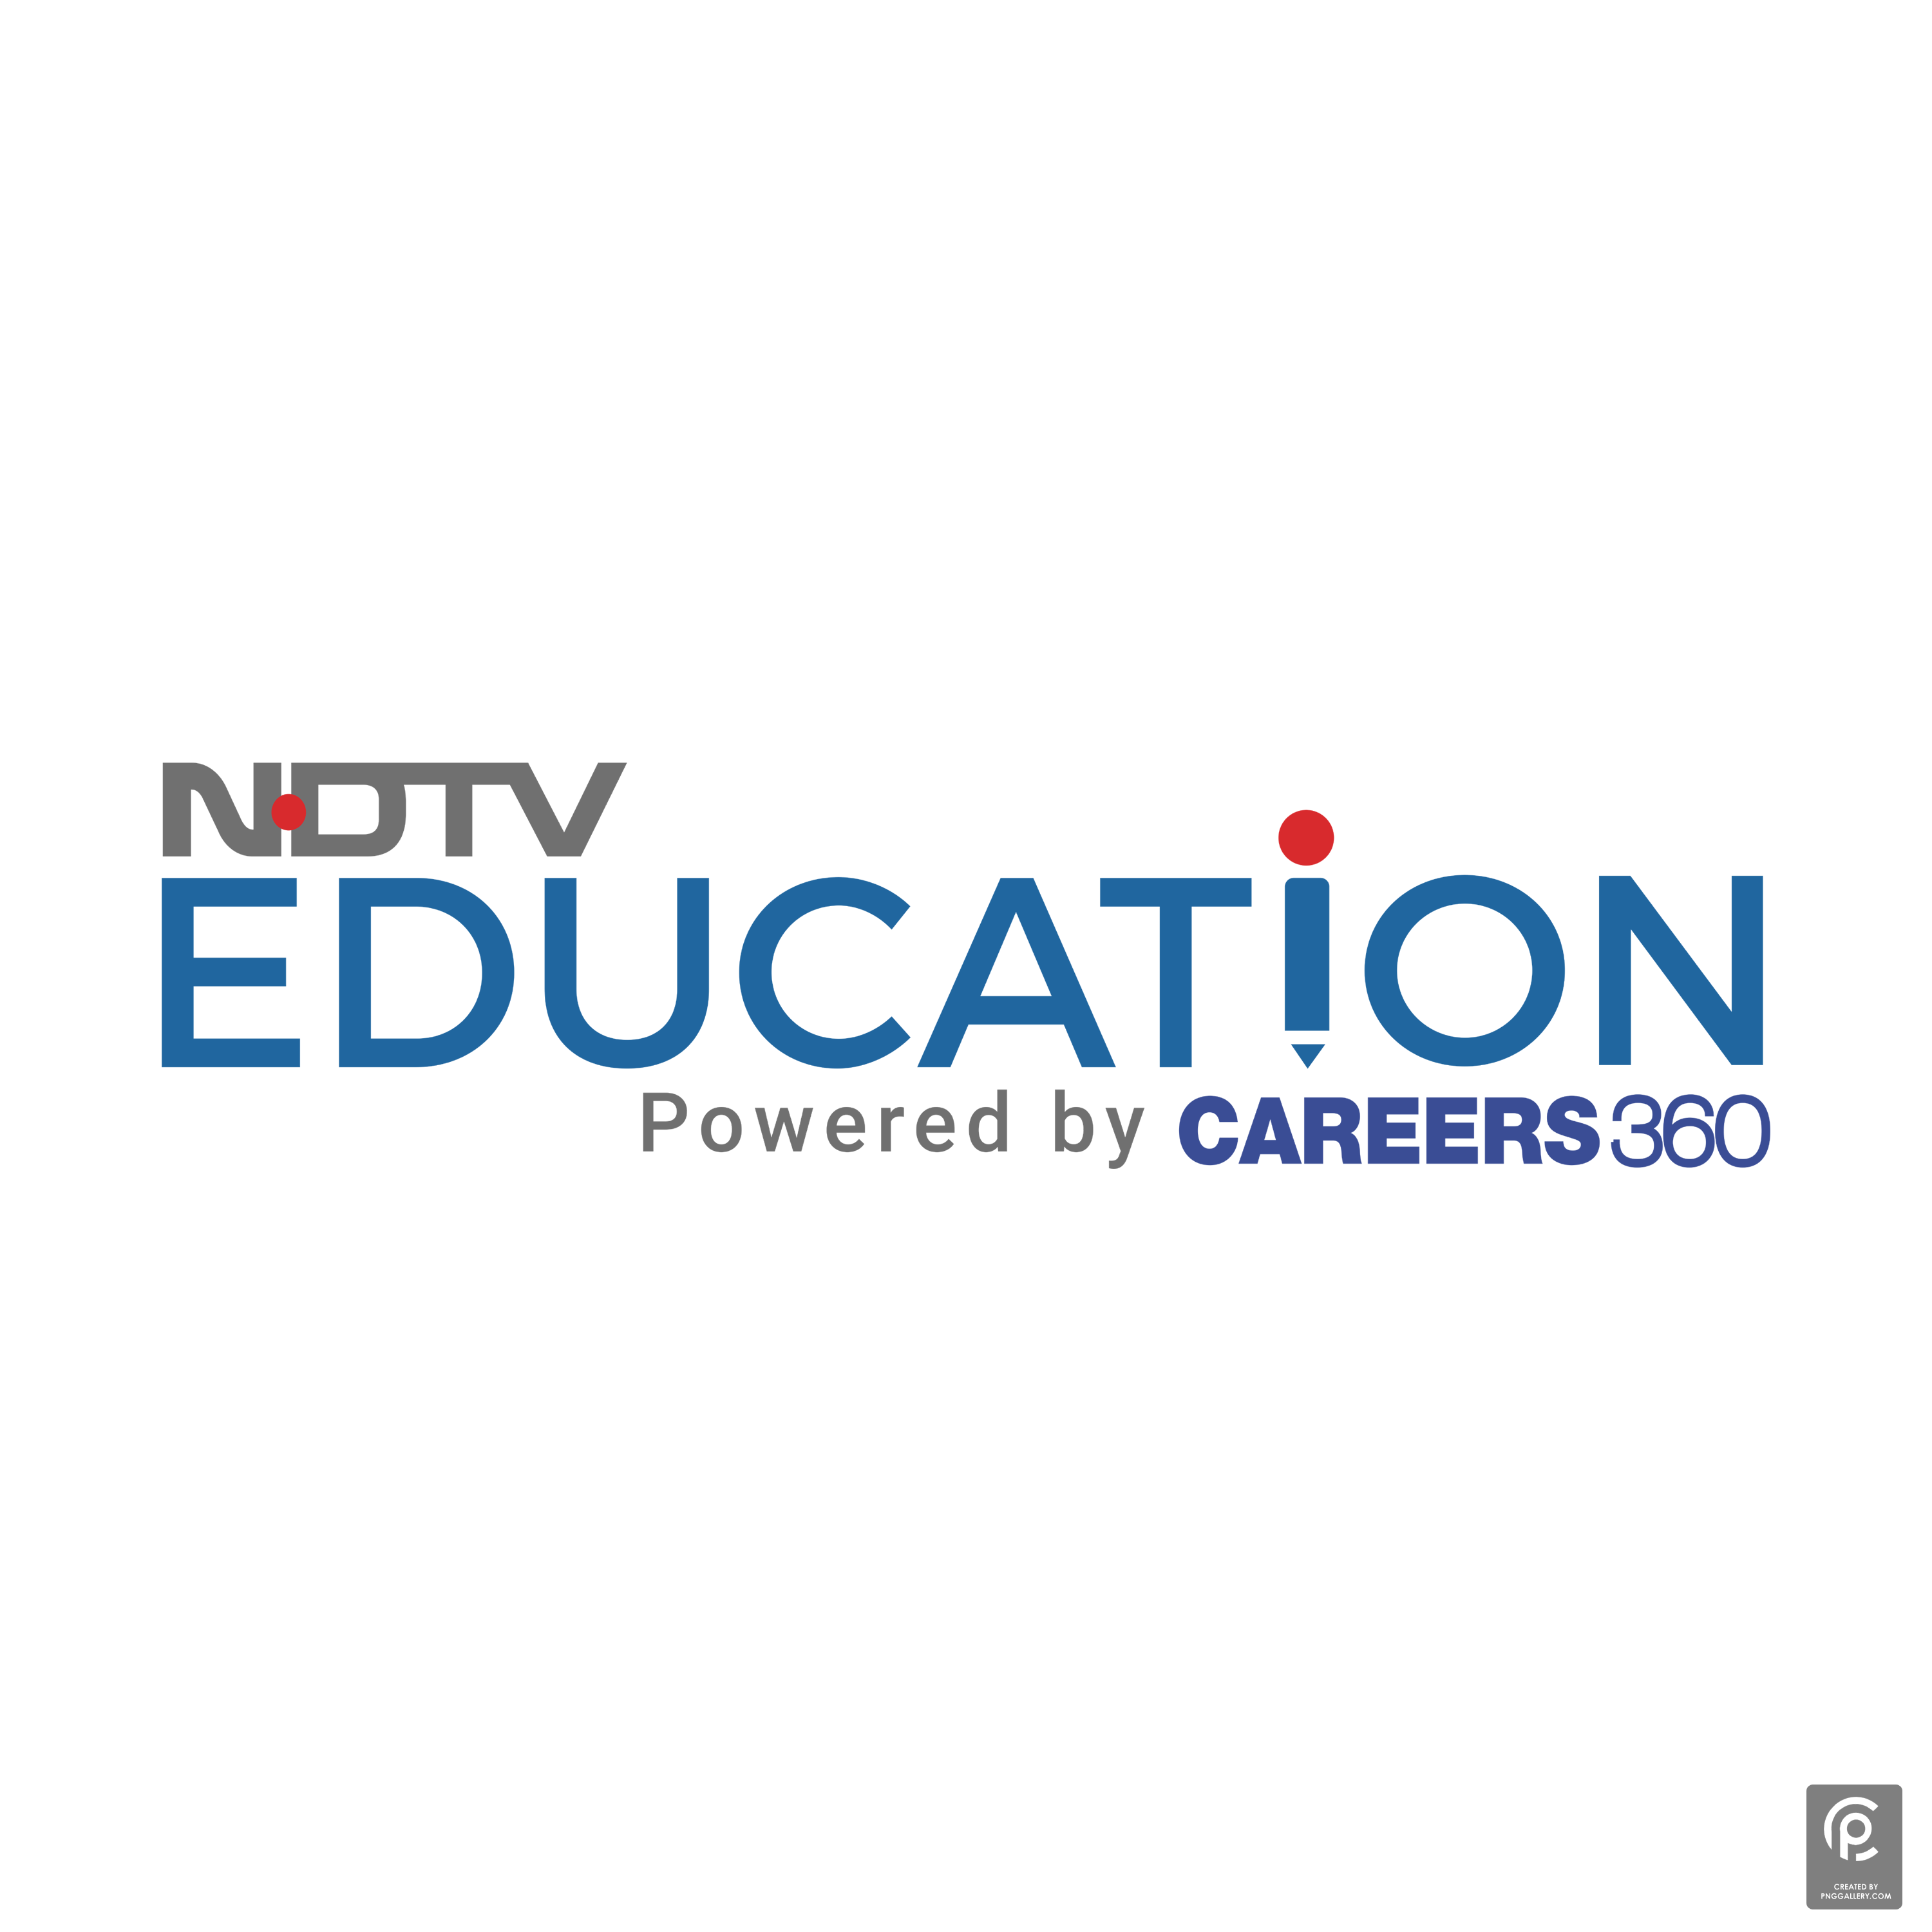 NDTV Education Logo Transparent Clipart